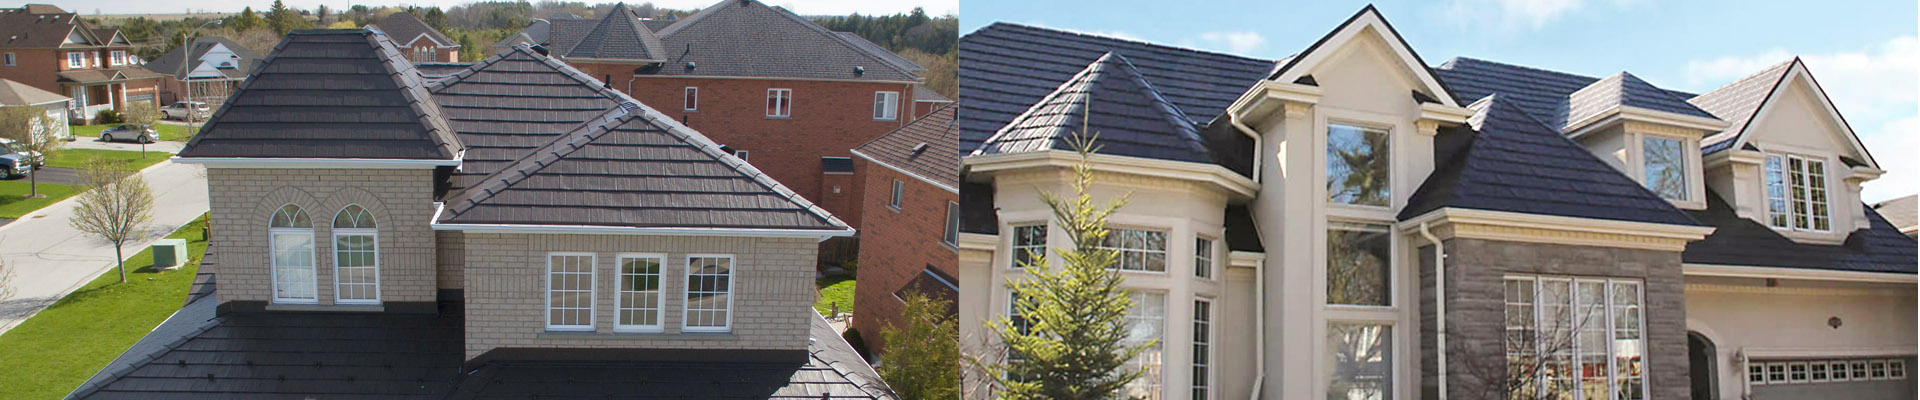 Alberta’s Permanent Roofing